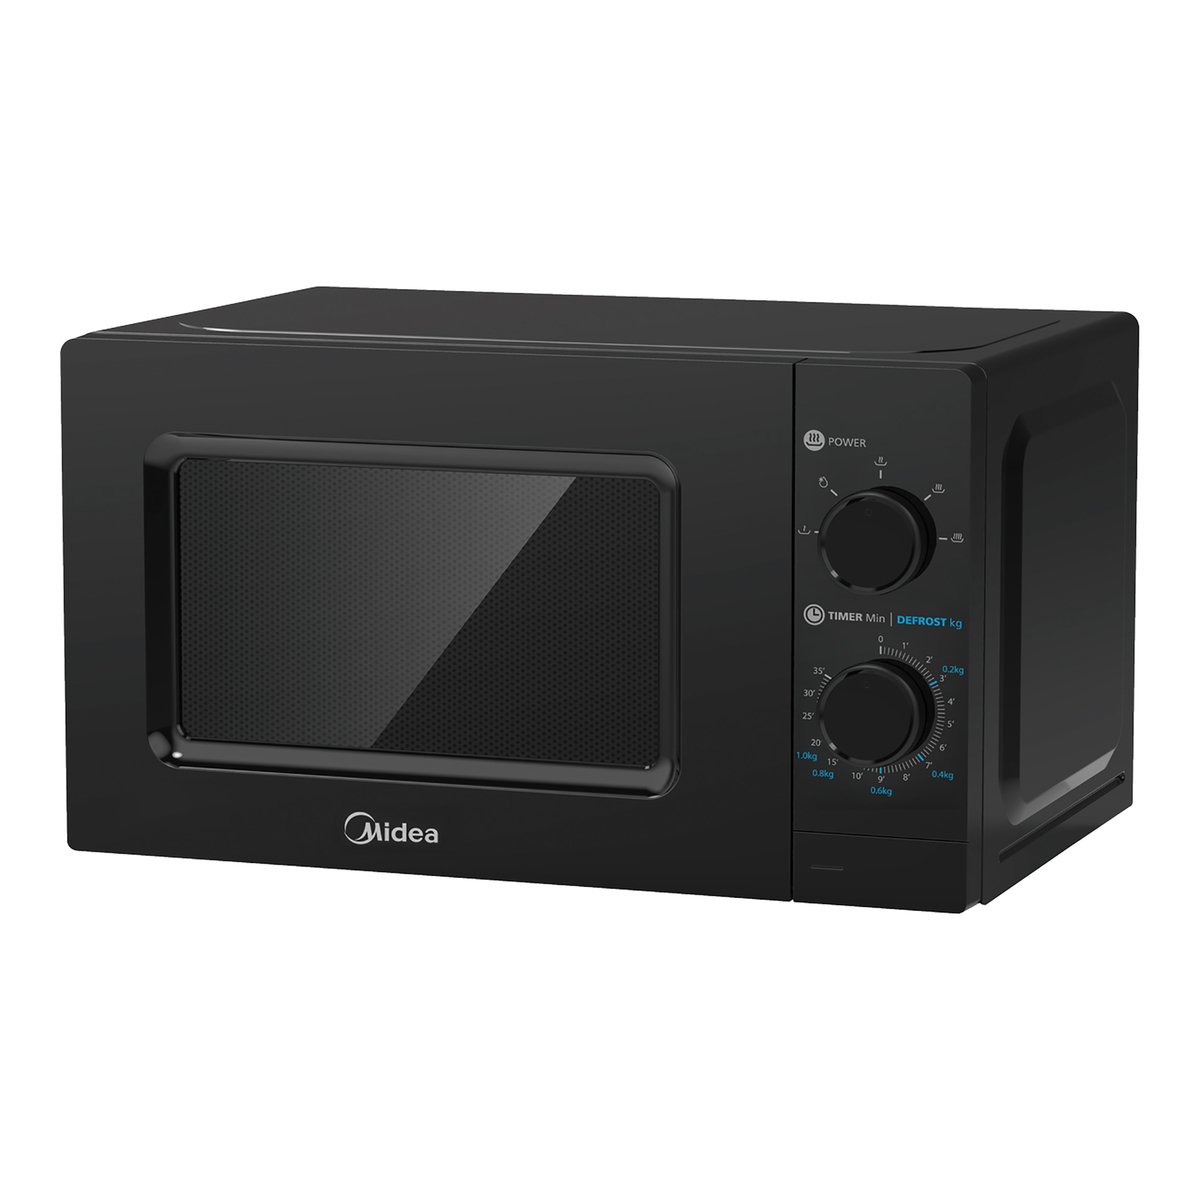 اشتري قم بشراء Midea Microwave Oven MMC21BK 20LTR Online at Best Price من الموقع - من لولو هايبر ماركت Microwave Ovens في الامارات